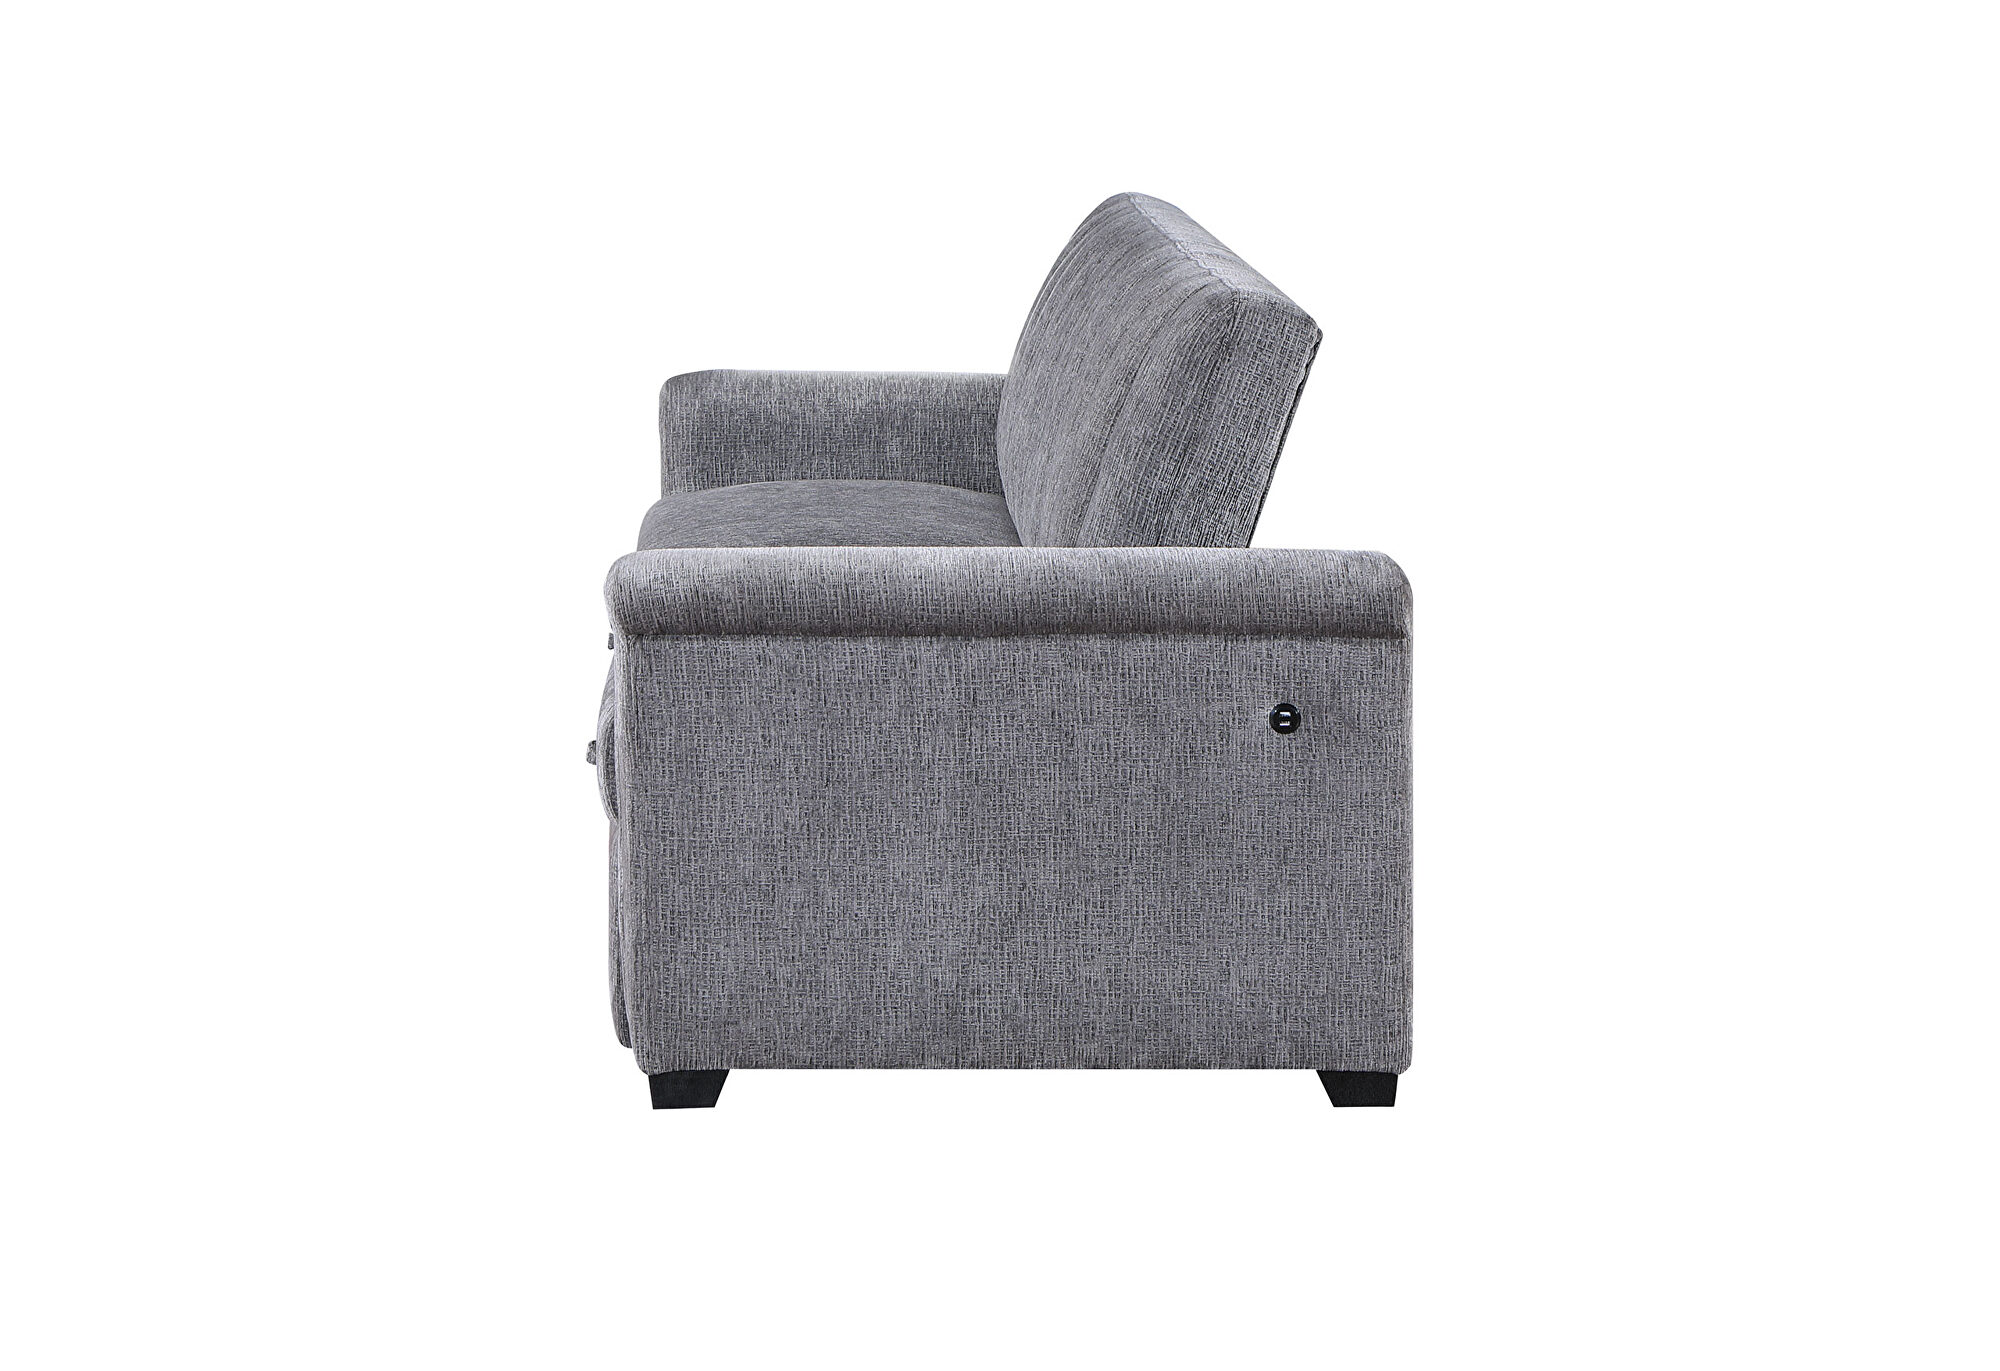 Bed GREY-PULL Gray Global SOFA Sofa BED U0201-DARK | G0201 OUT Comfyco